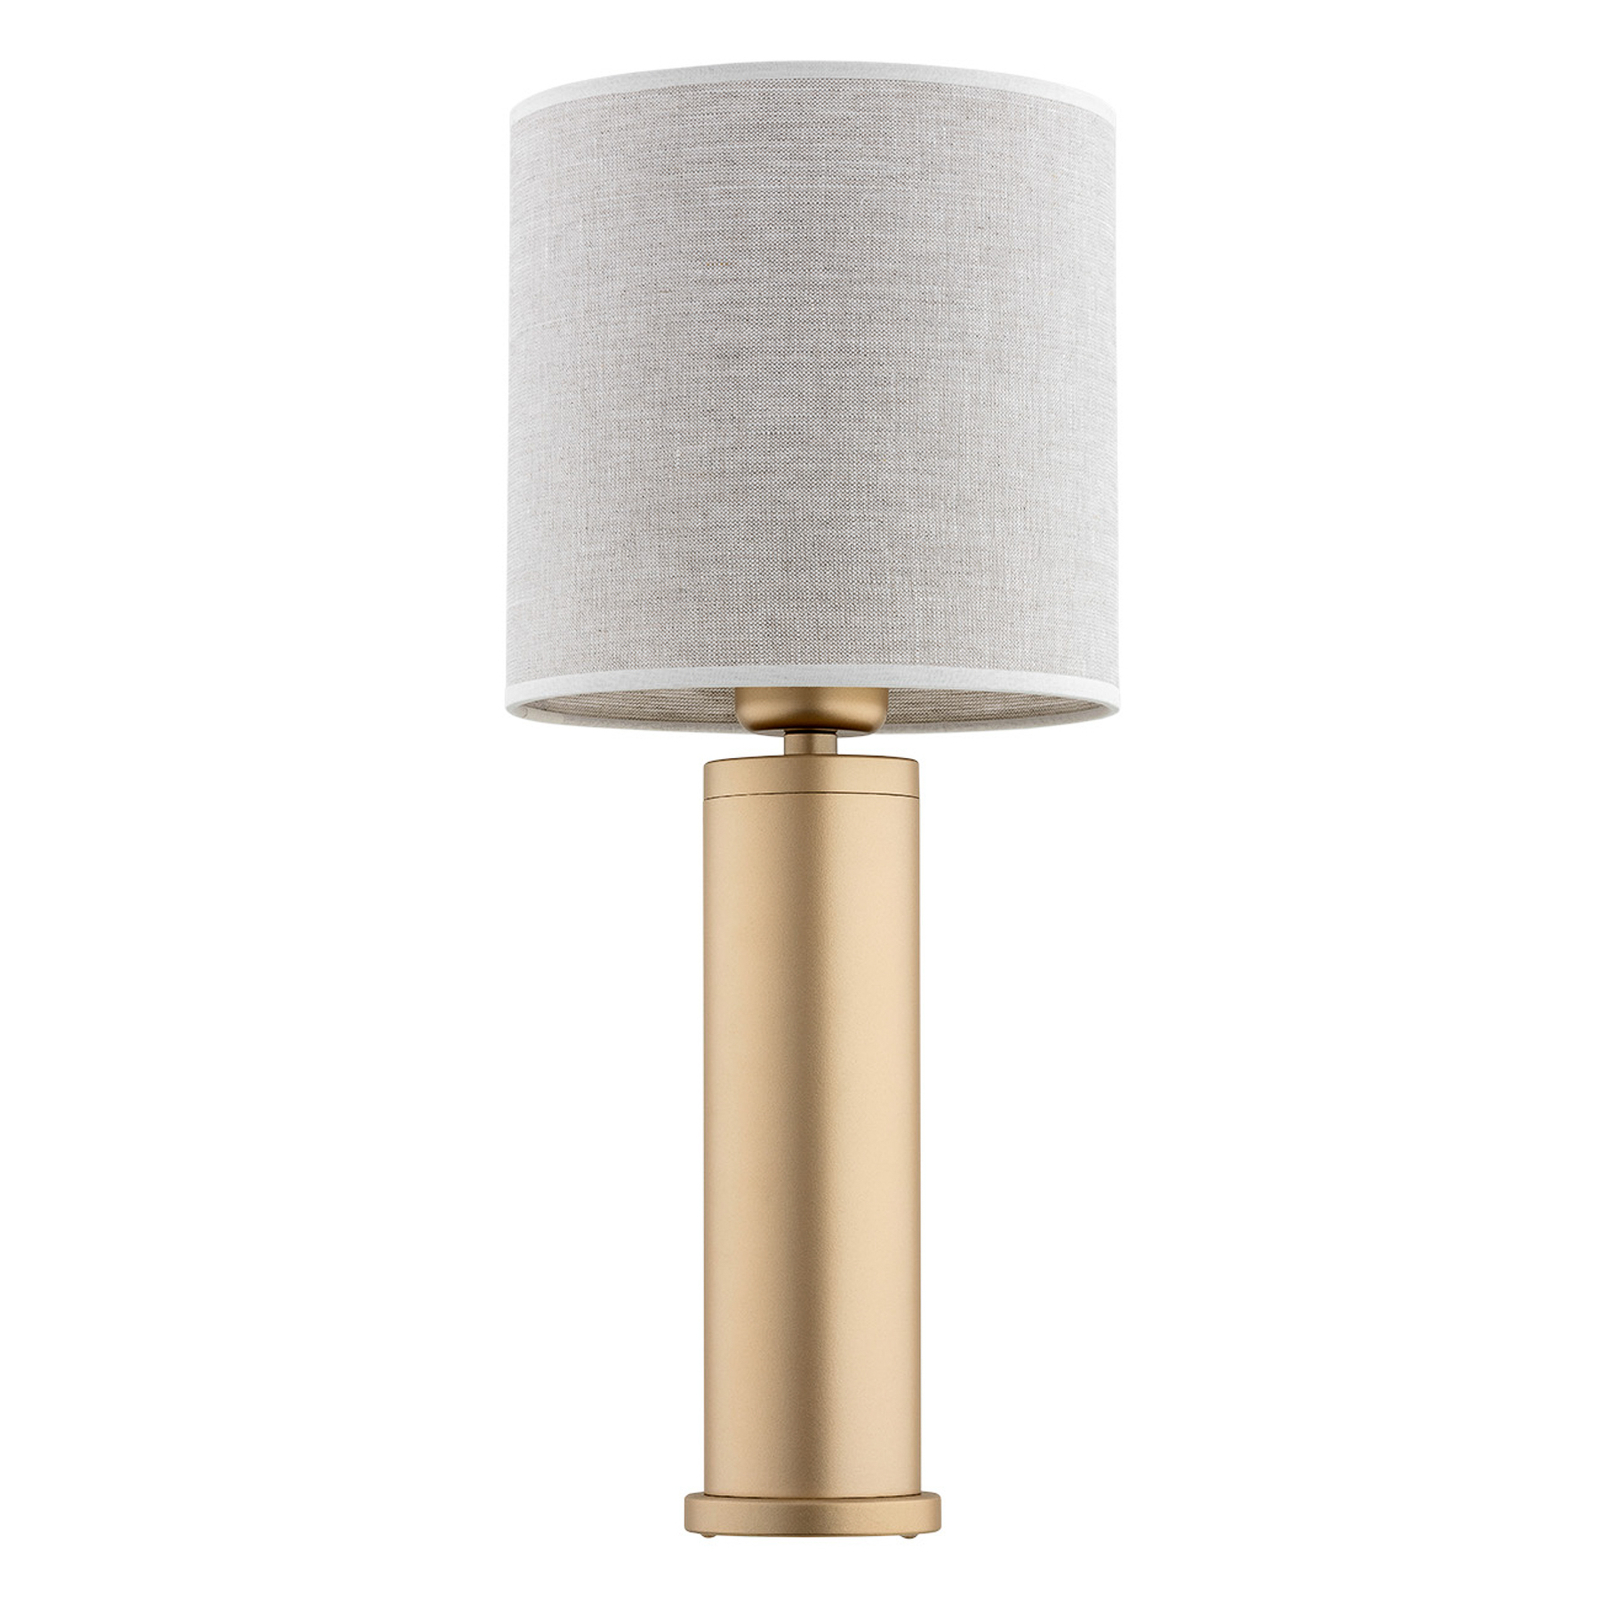 Romina table lamp, linen lampshade, gold base